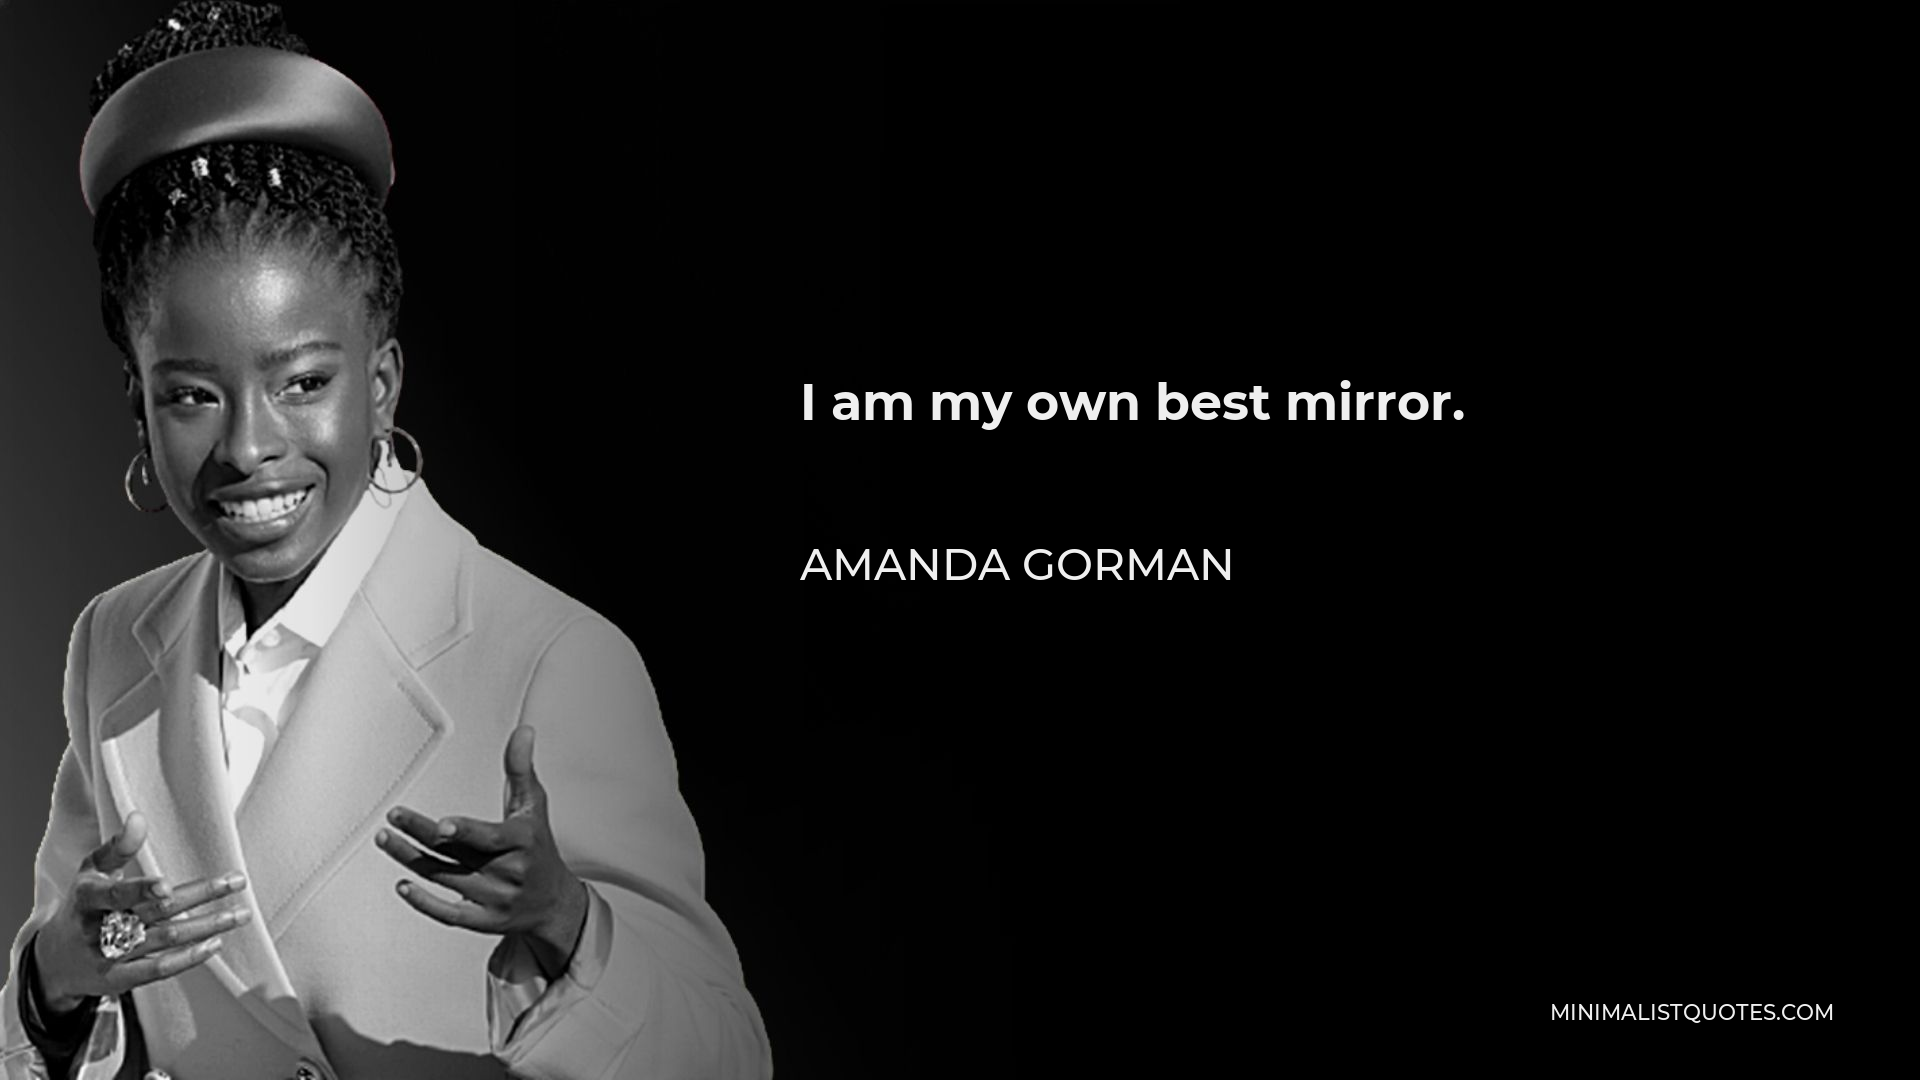 Amanda Gorman Quote - I am my own best mirror.